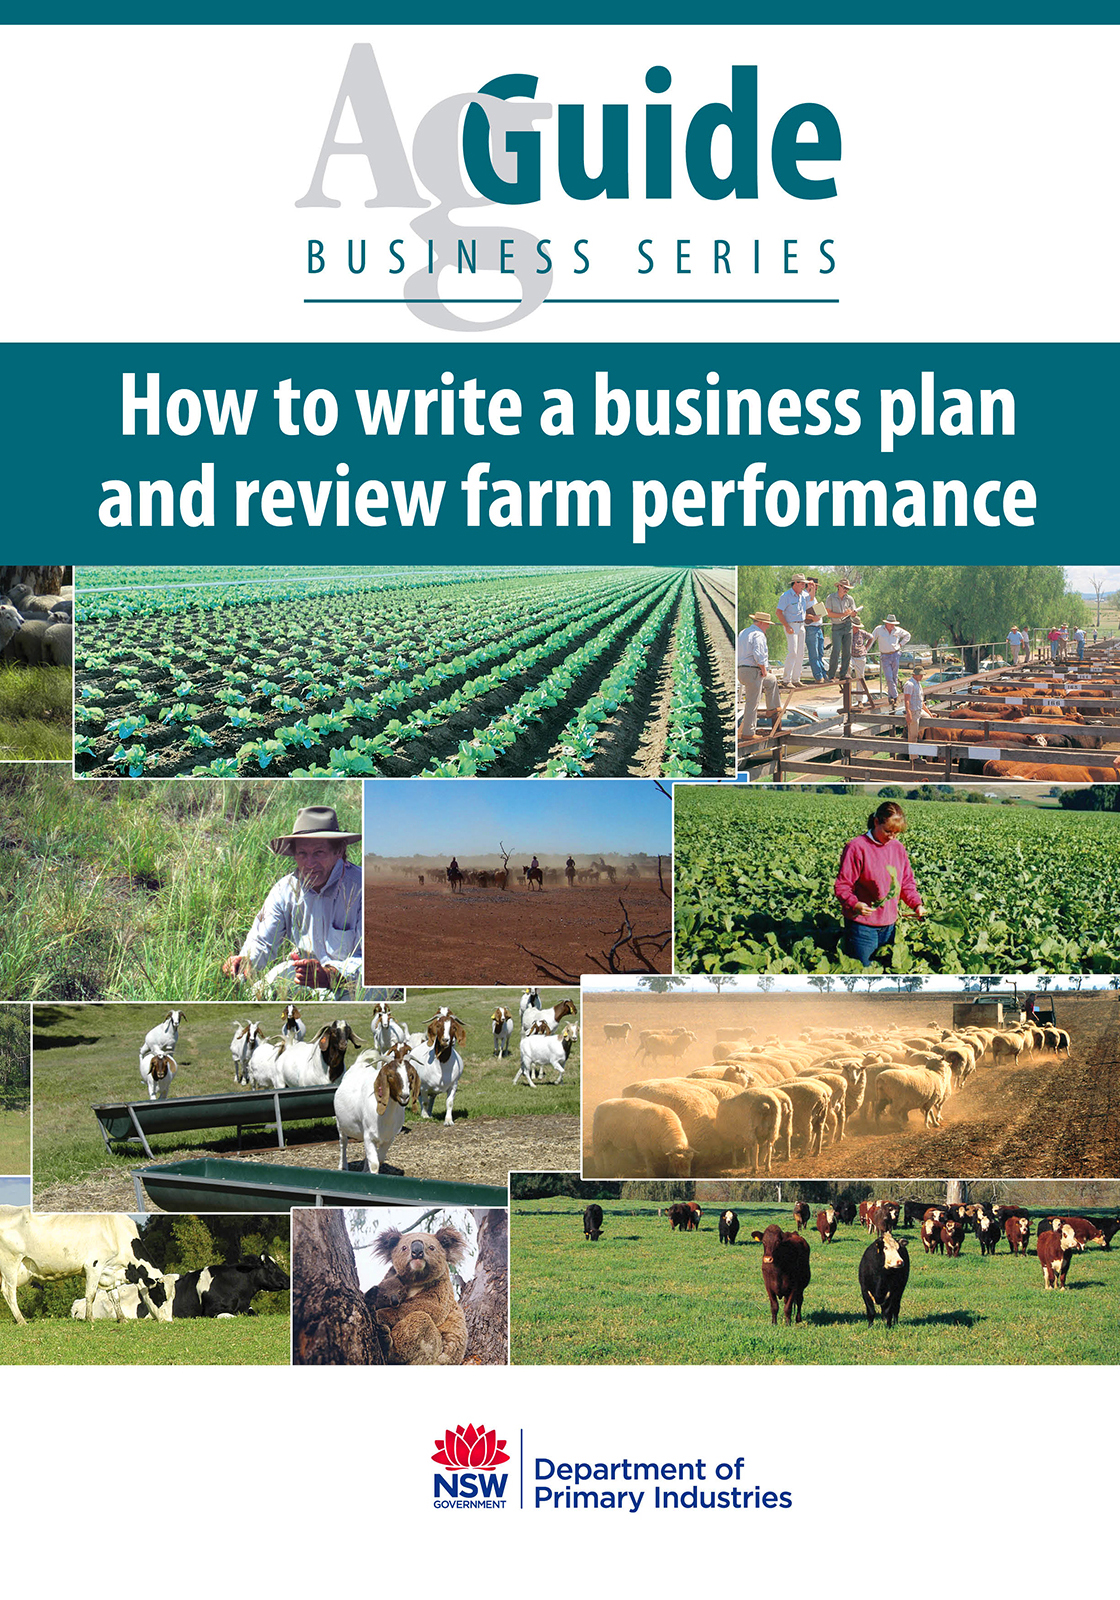 latest crop business plan